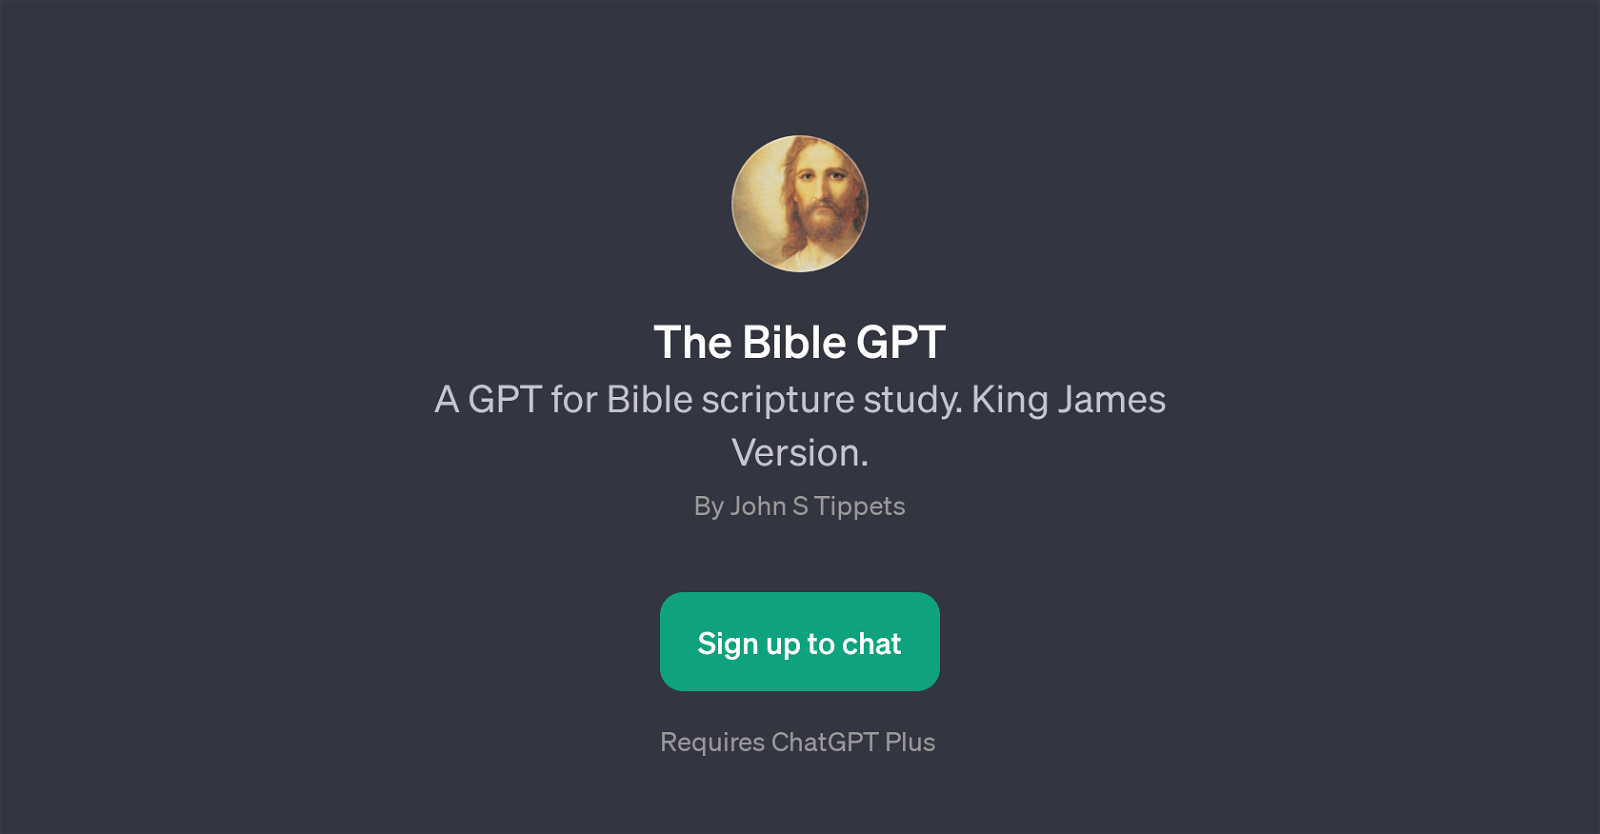 The Bible GPT website